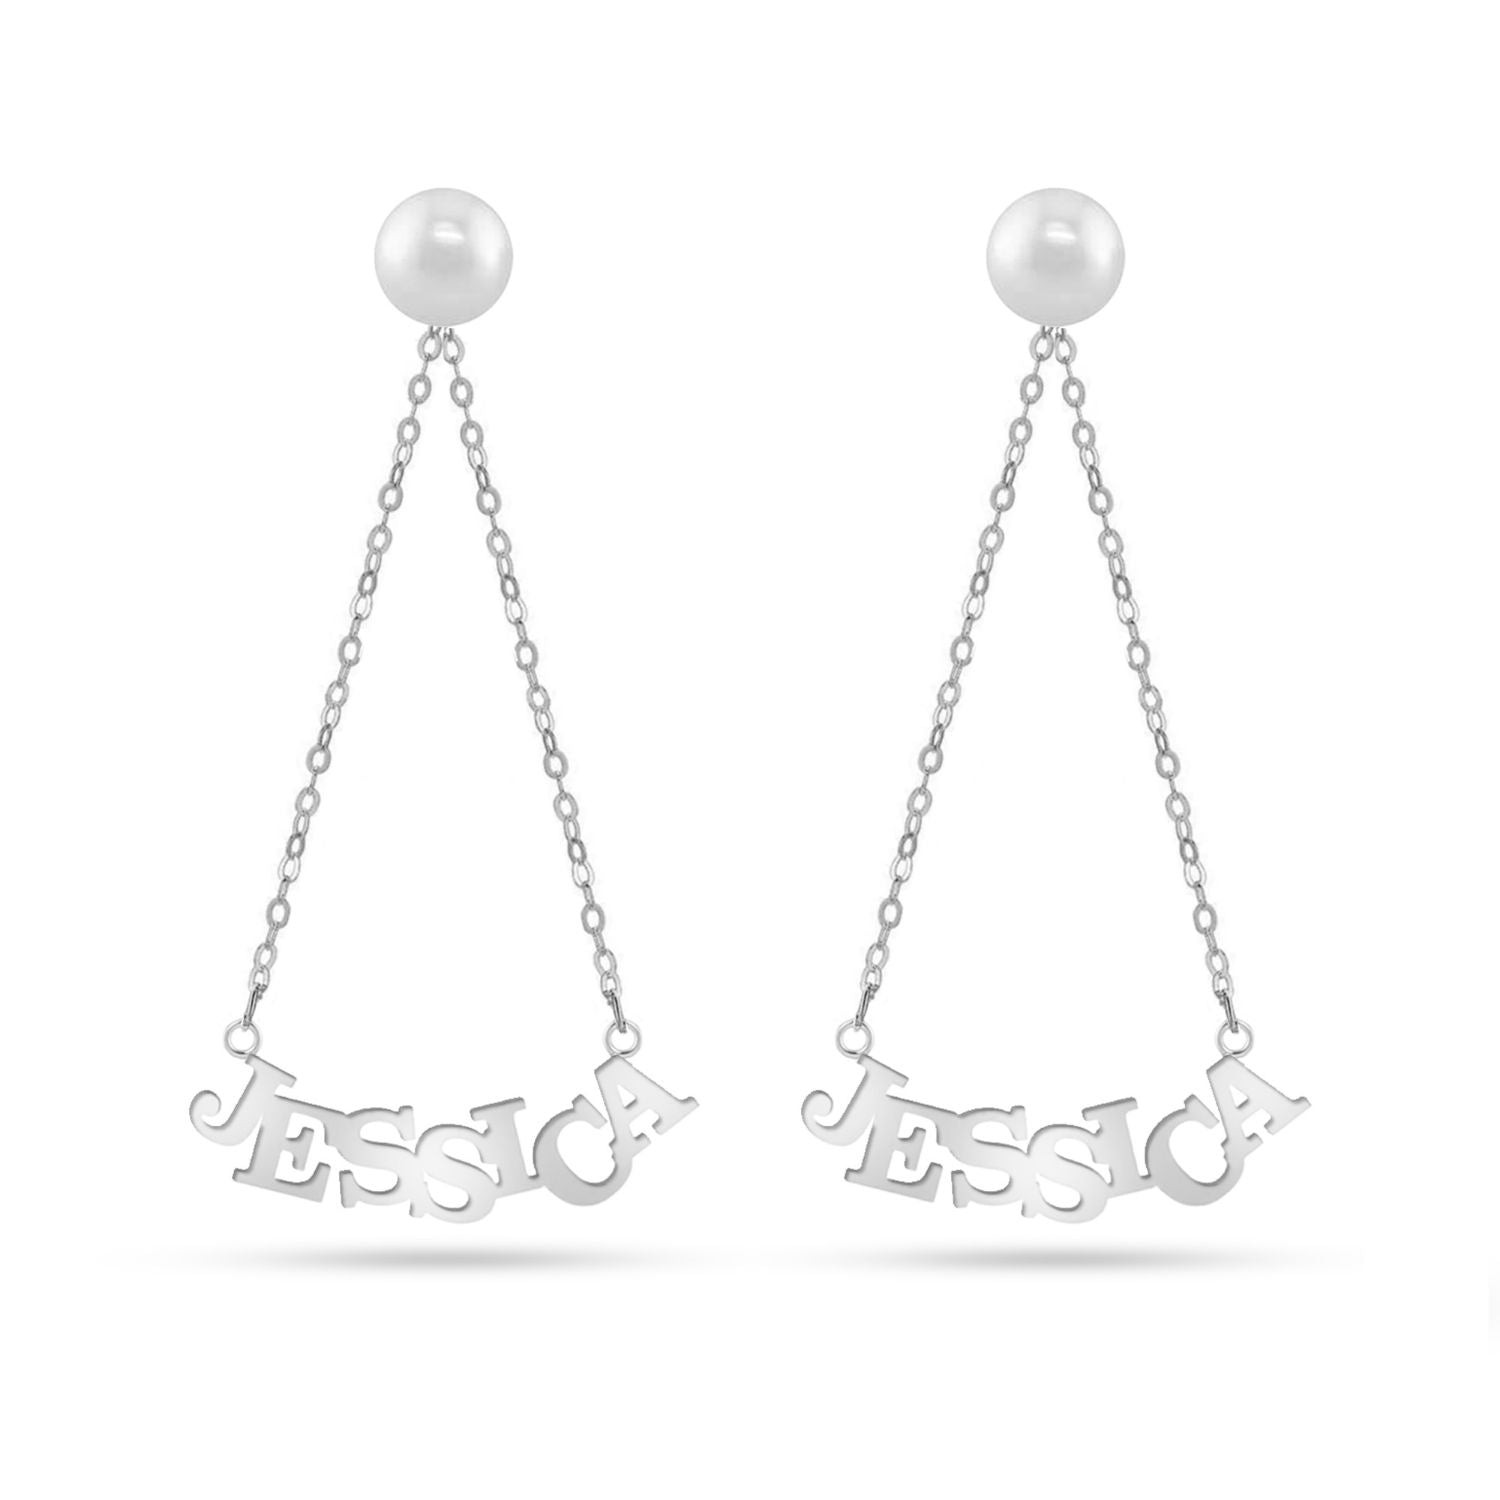 Personalised 925 Sterling Silver Name Dangler Earrings for Teen Women